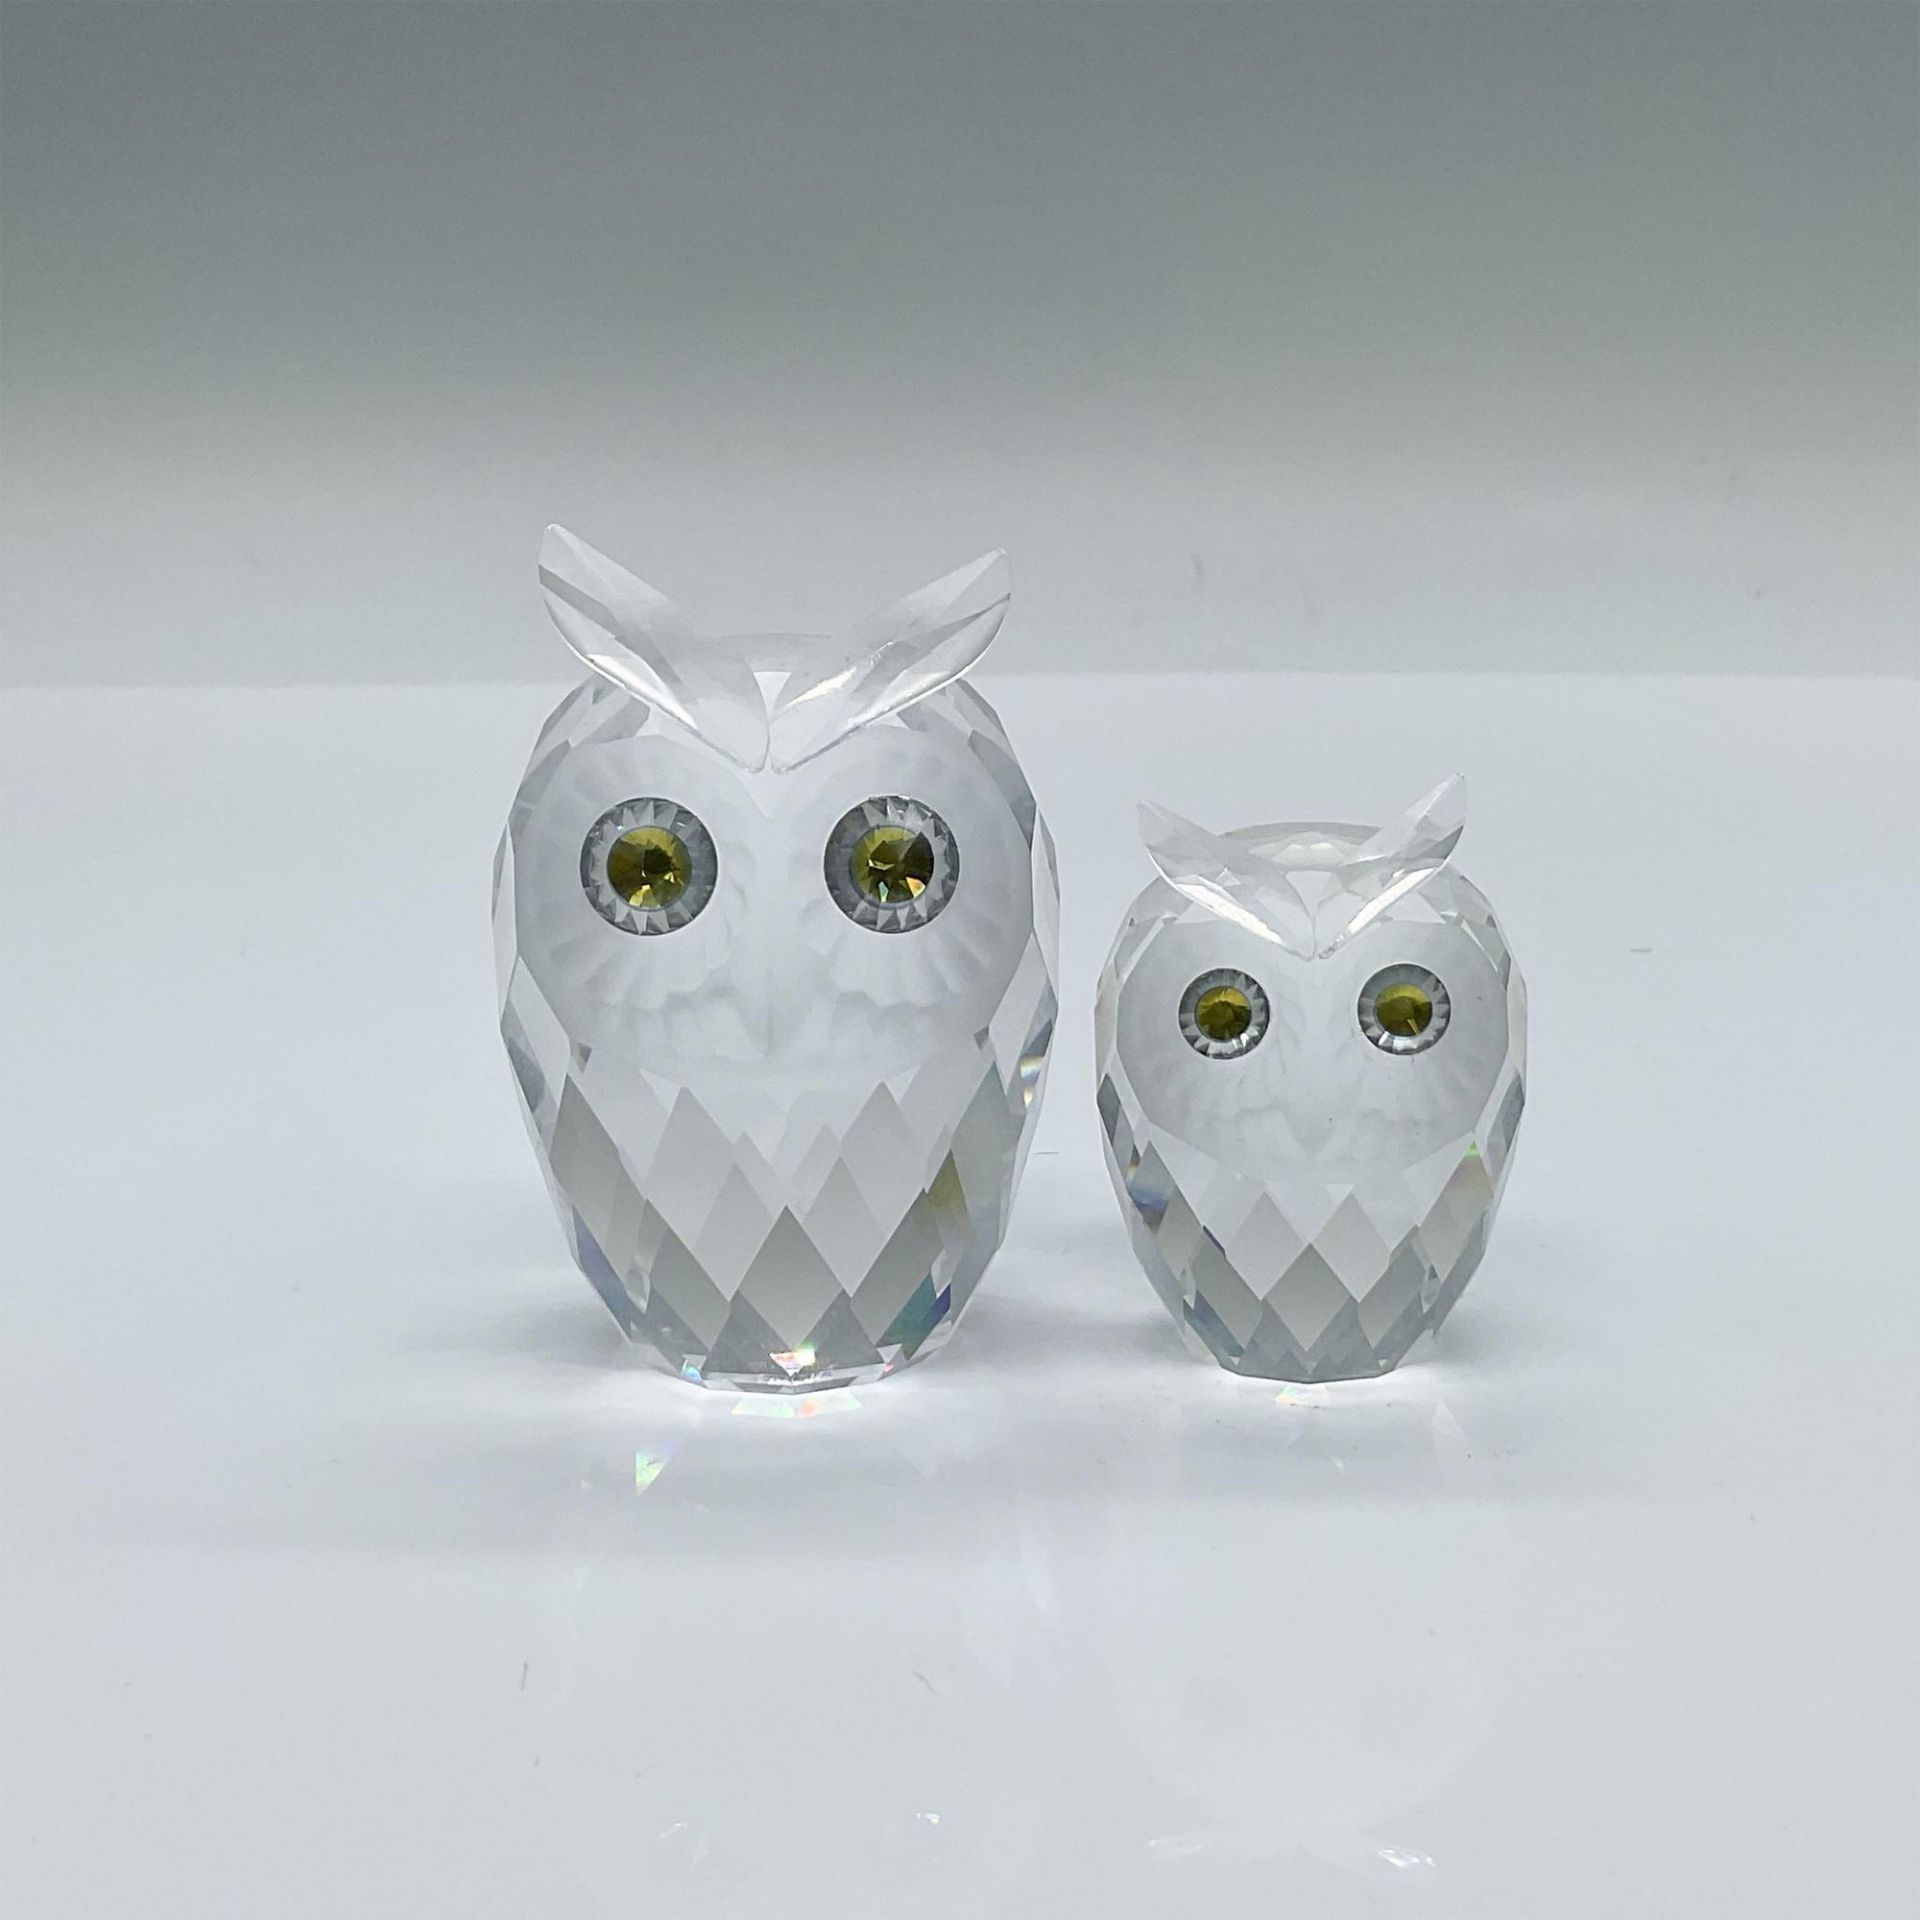 2pc Swarovski Crystal Figurines, Large and Small Owl